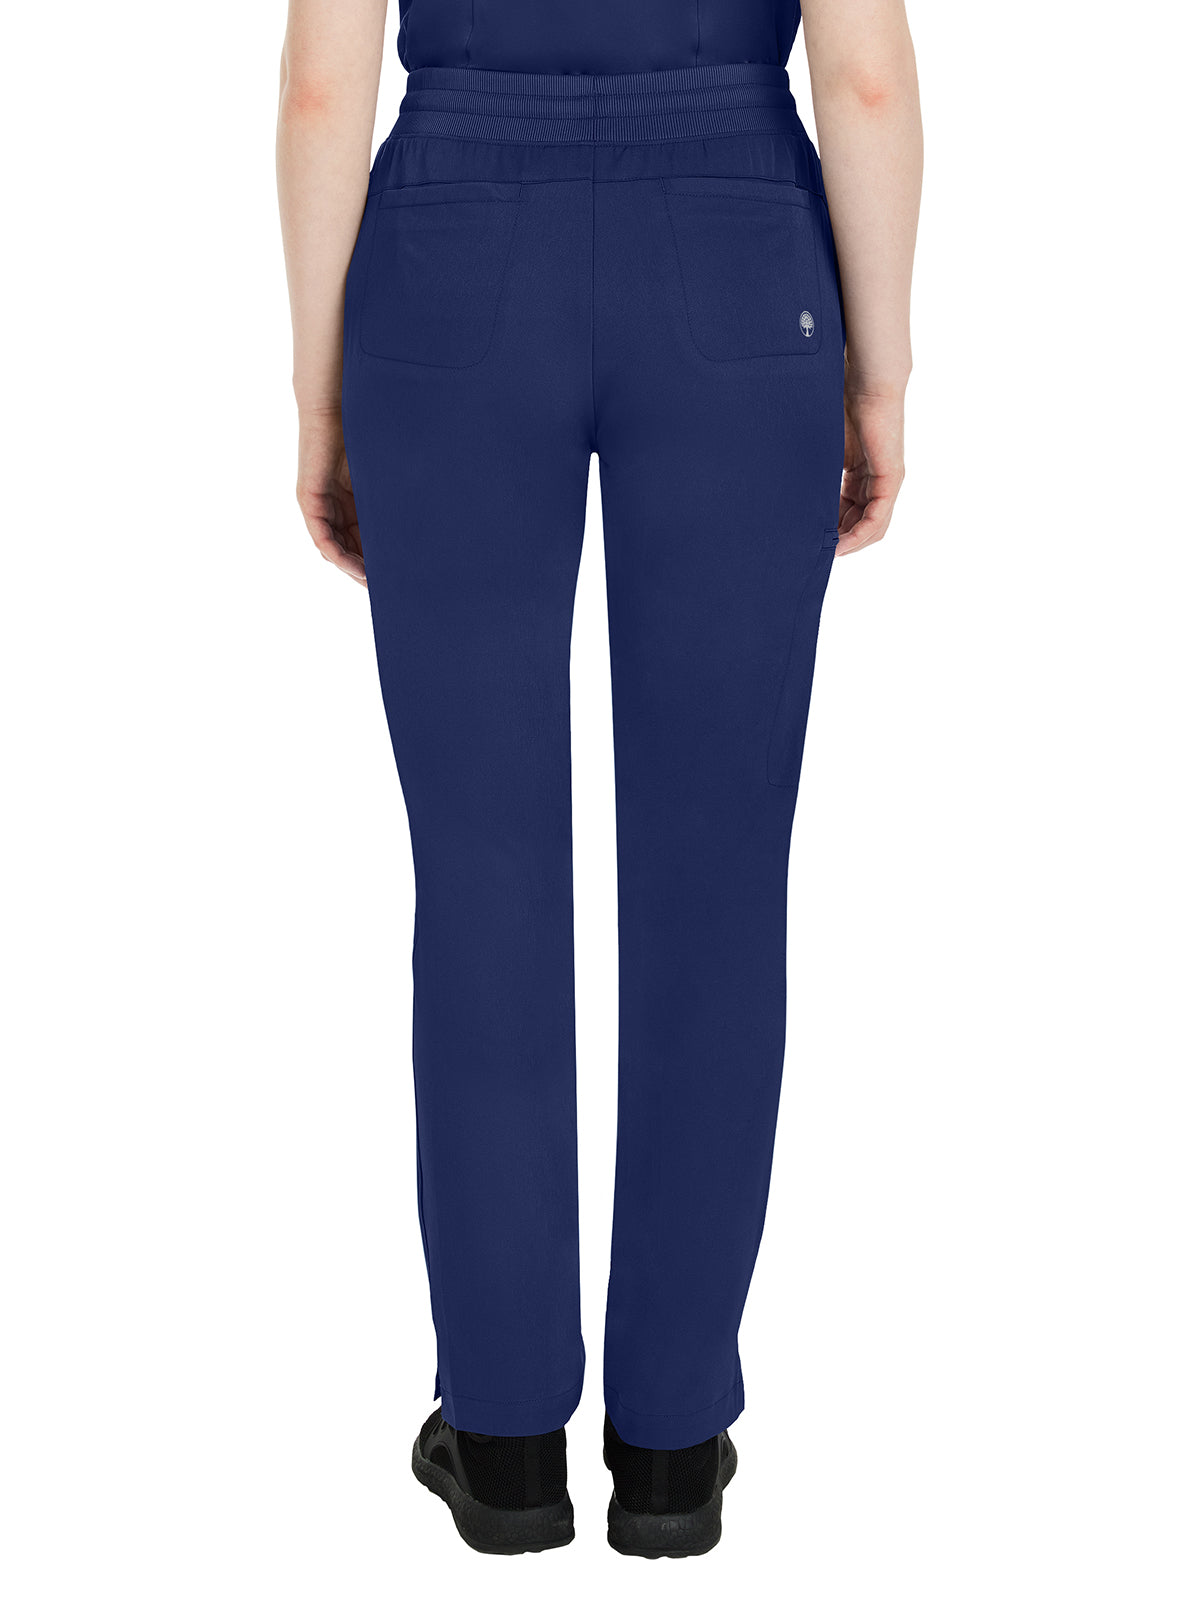 Women's Modern Fit Pant - 9530 - Navy